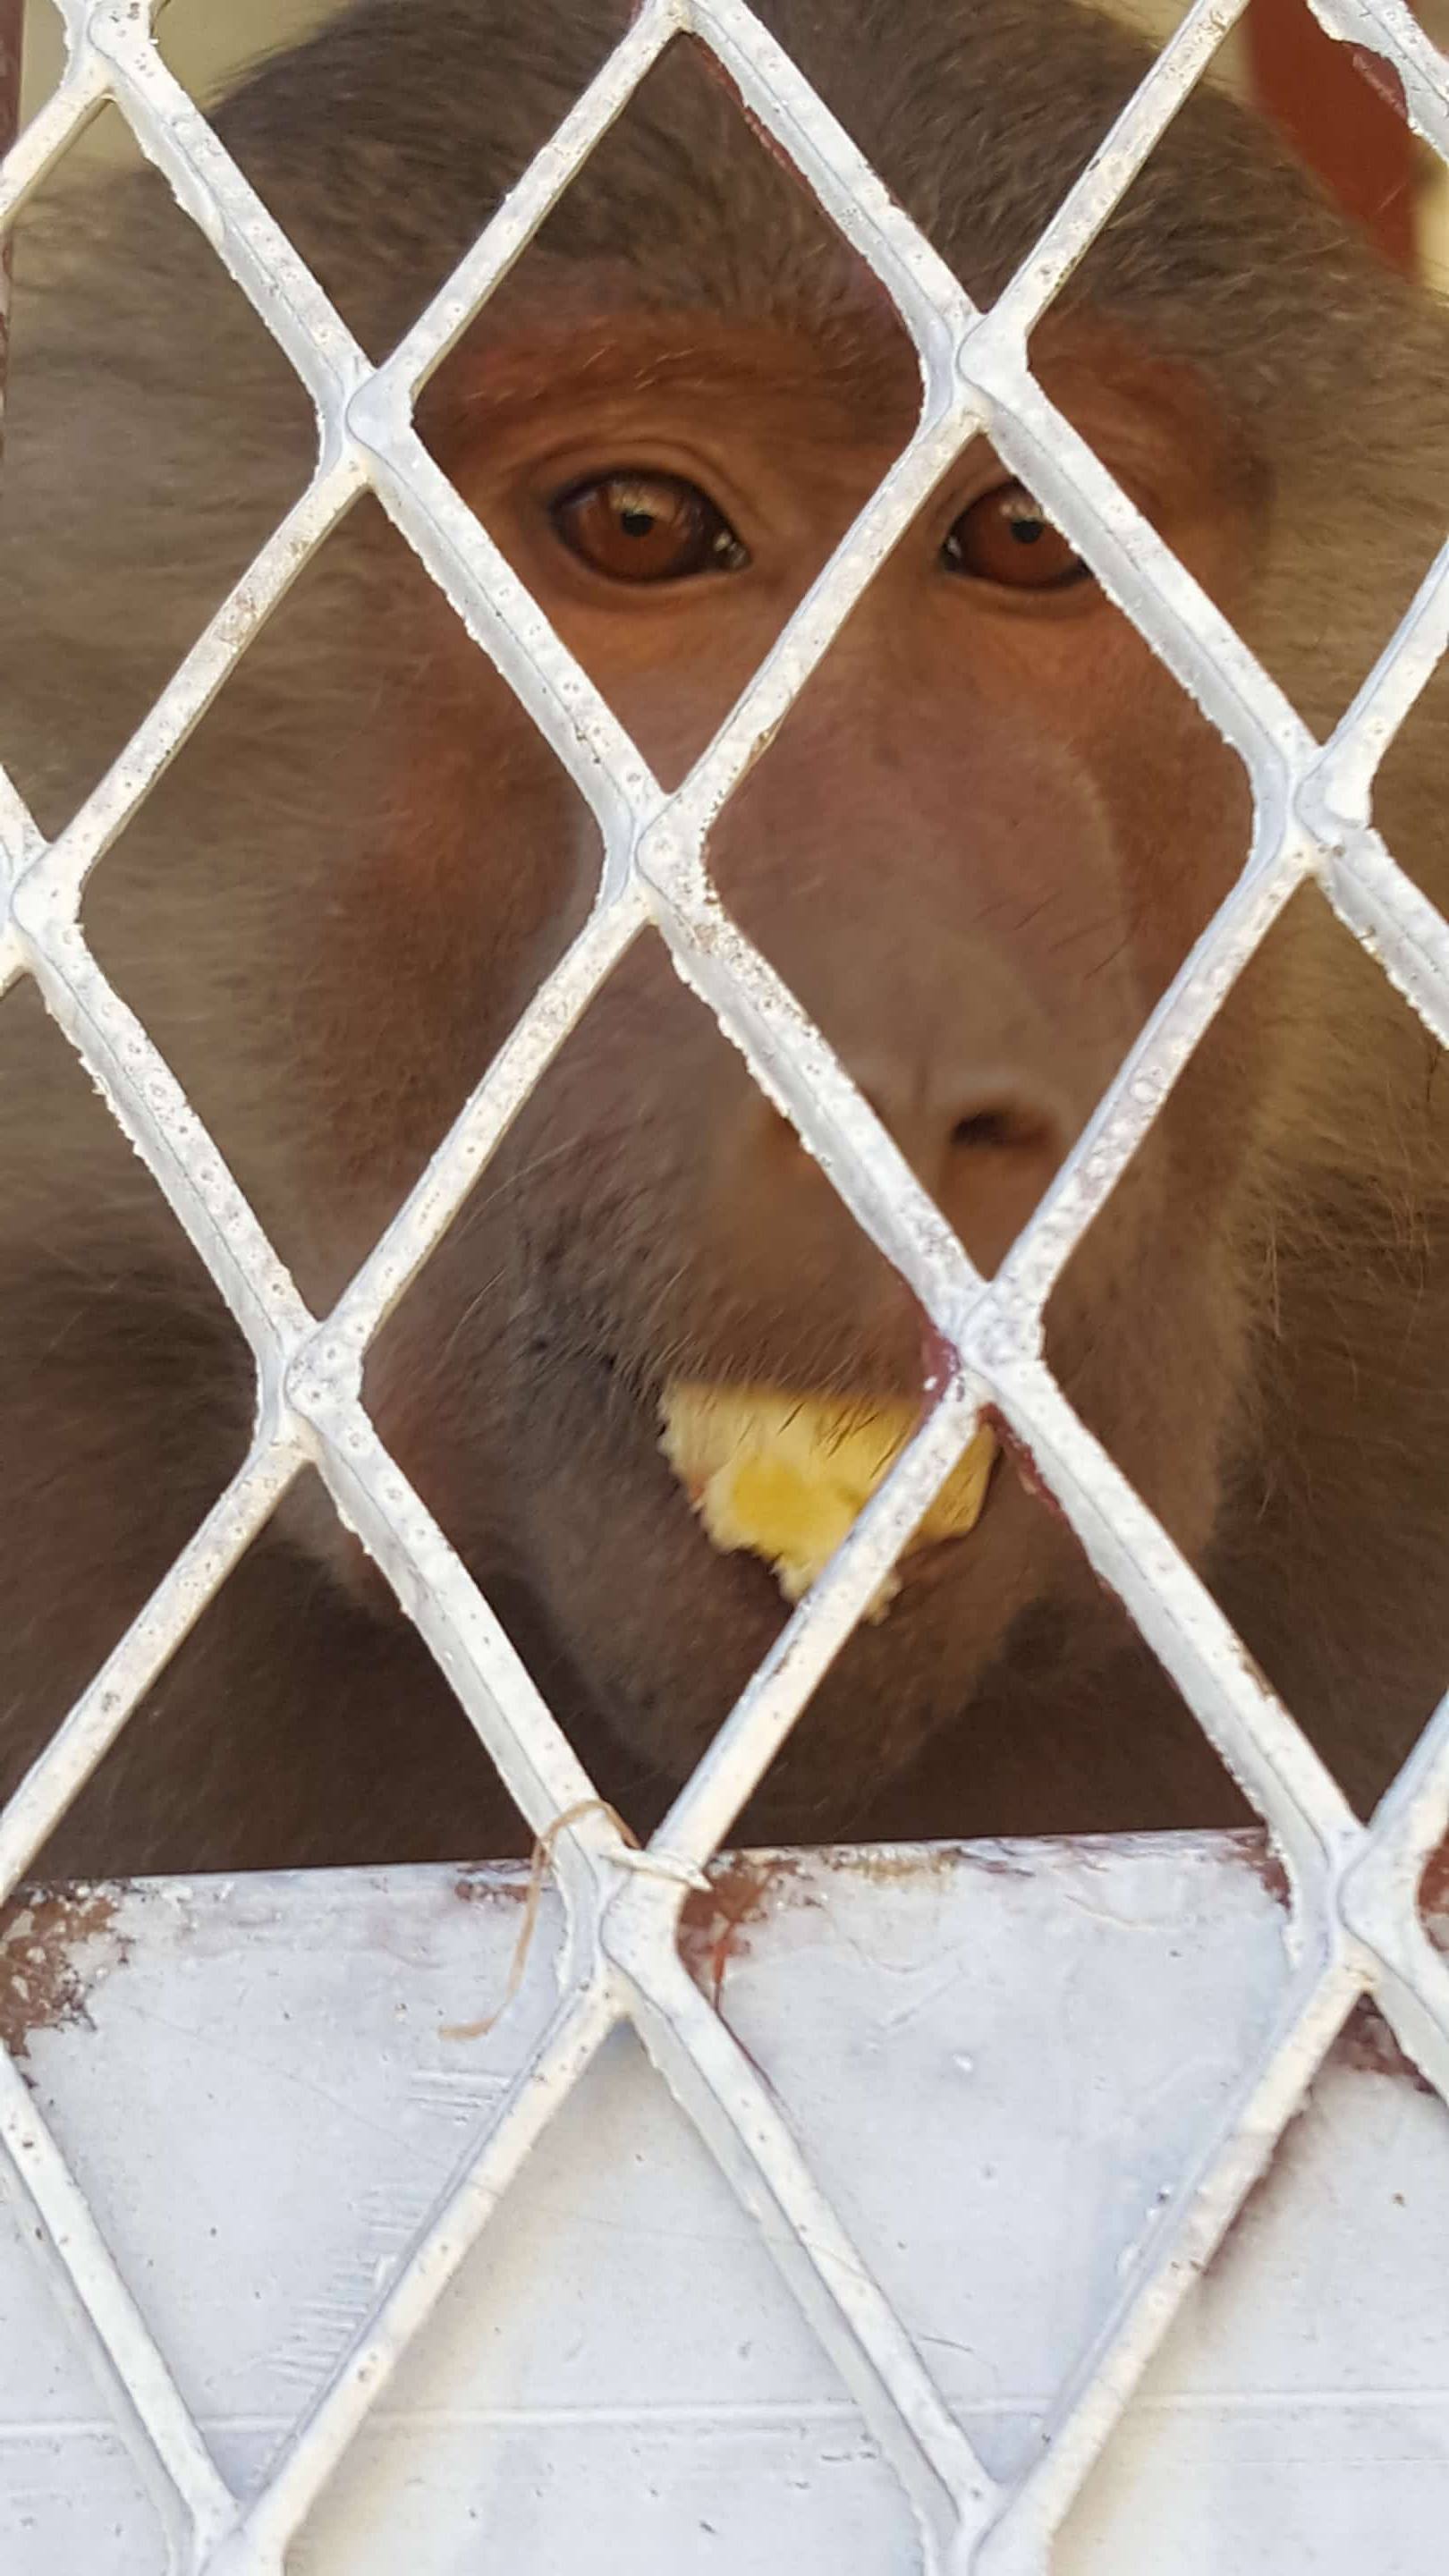 ibb zoo baboon with banana from owap ar donors salman pic 29  dec 2017 25637243_295393407648306_417503883_o.jpg